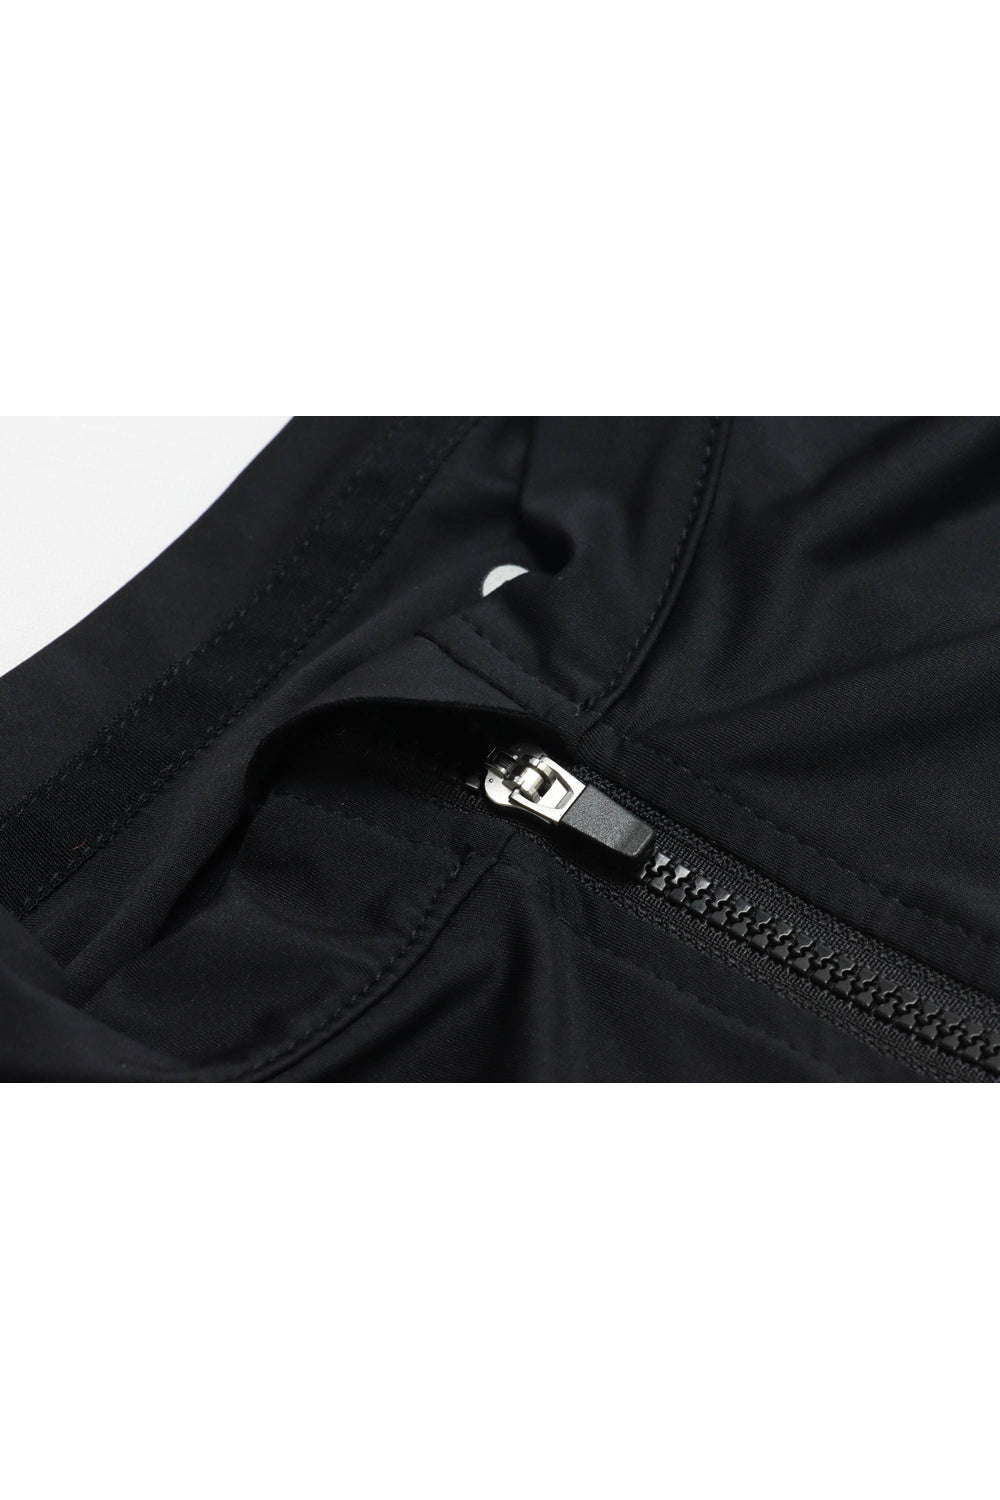 Sundried Sport Pianura Men's Black Short Sleeve Cycle Jersey Short Sleeve Jersey Activewear